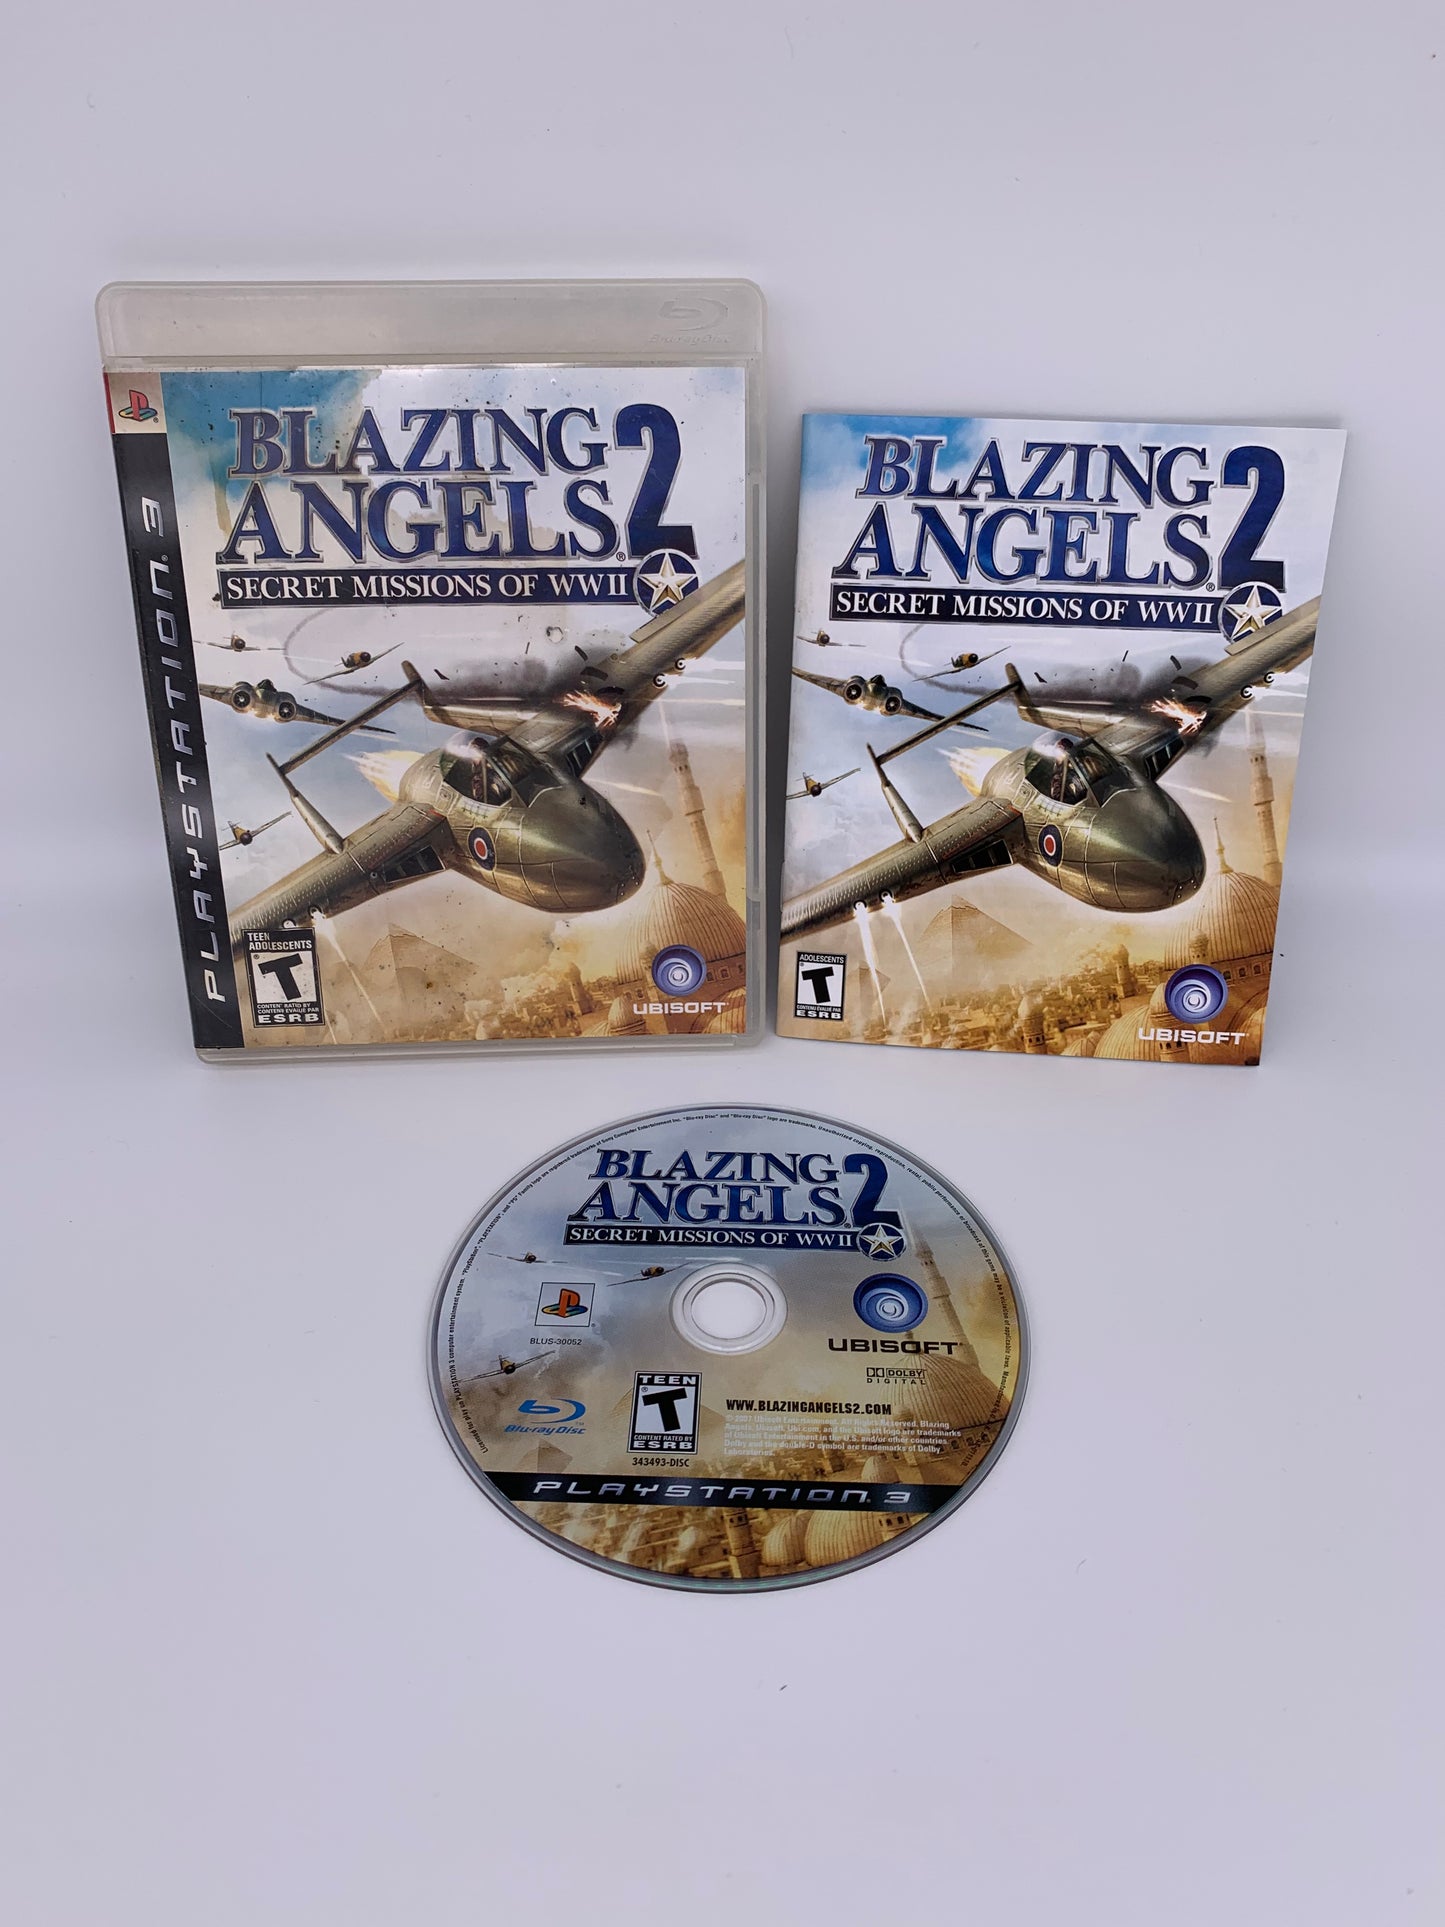 PiXEL-RETRO.COM : SONY PLAYSTATION 3 (PS3) COMPLET CIB BOX MANUAL GAME NTSC BLAZING ANGELS 2 SECRET MISSIONS OF WWII